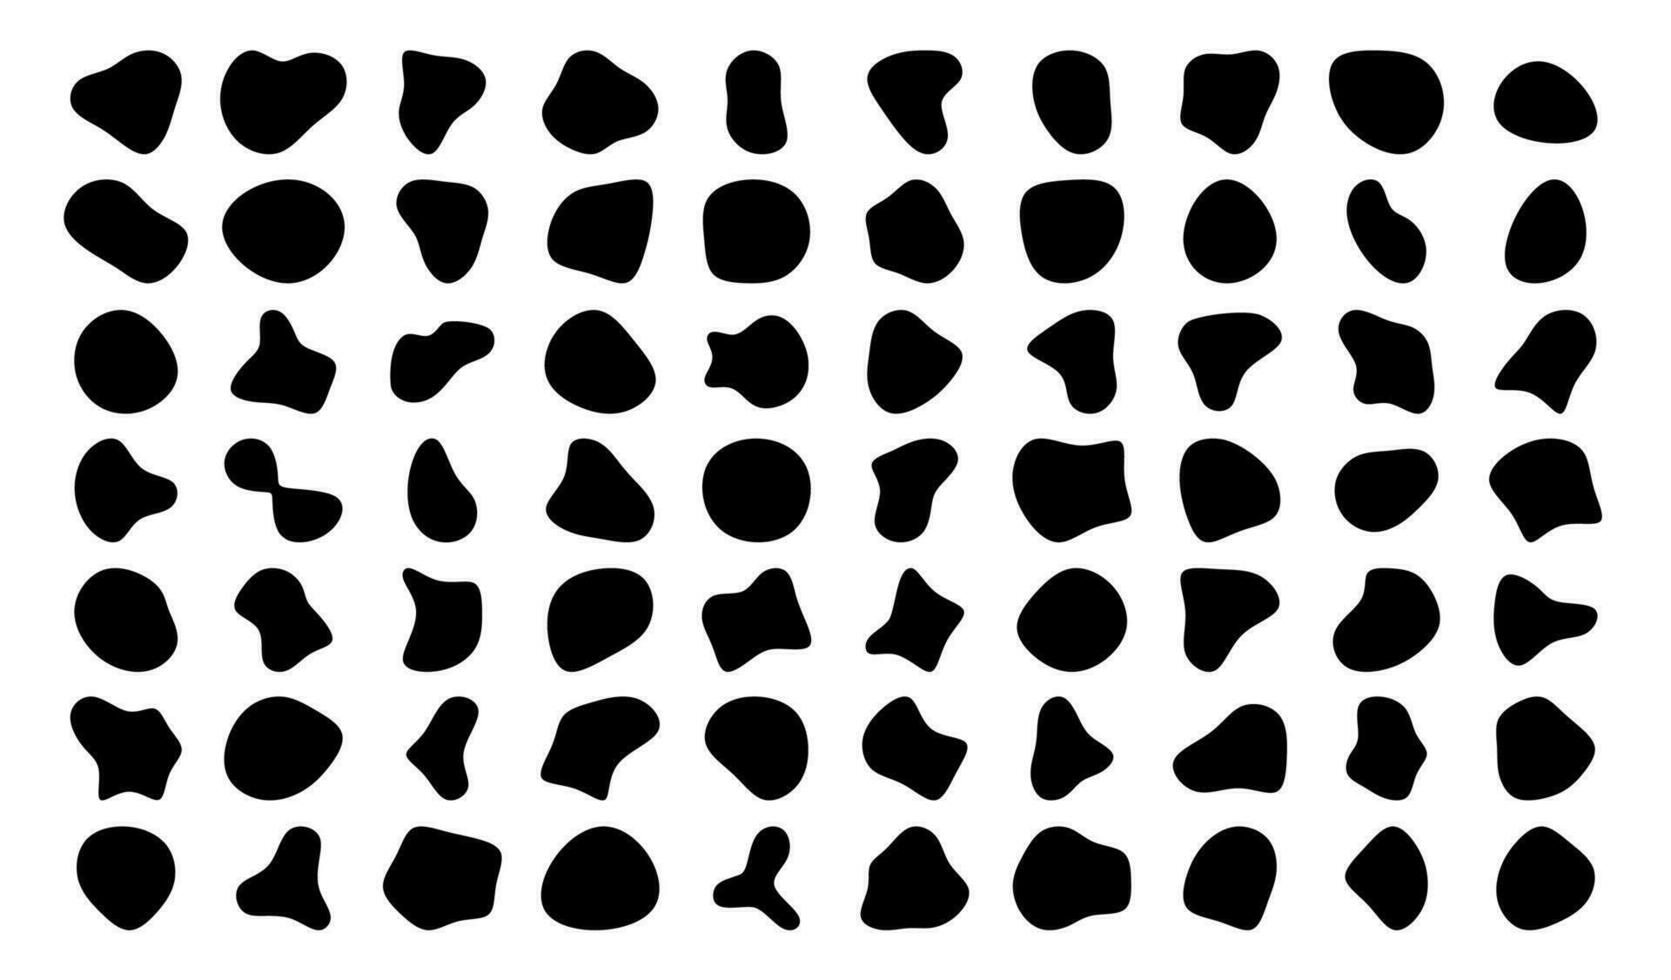 Fluid shapes. Random color blotch, blobs abstract organic shapes. Pebble, drop amoeba stone amorphous silhouettes. Inkblot stain 90s texture vector set